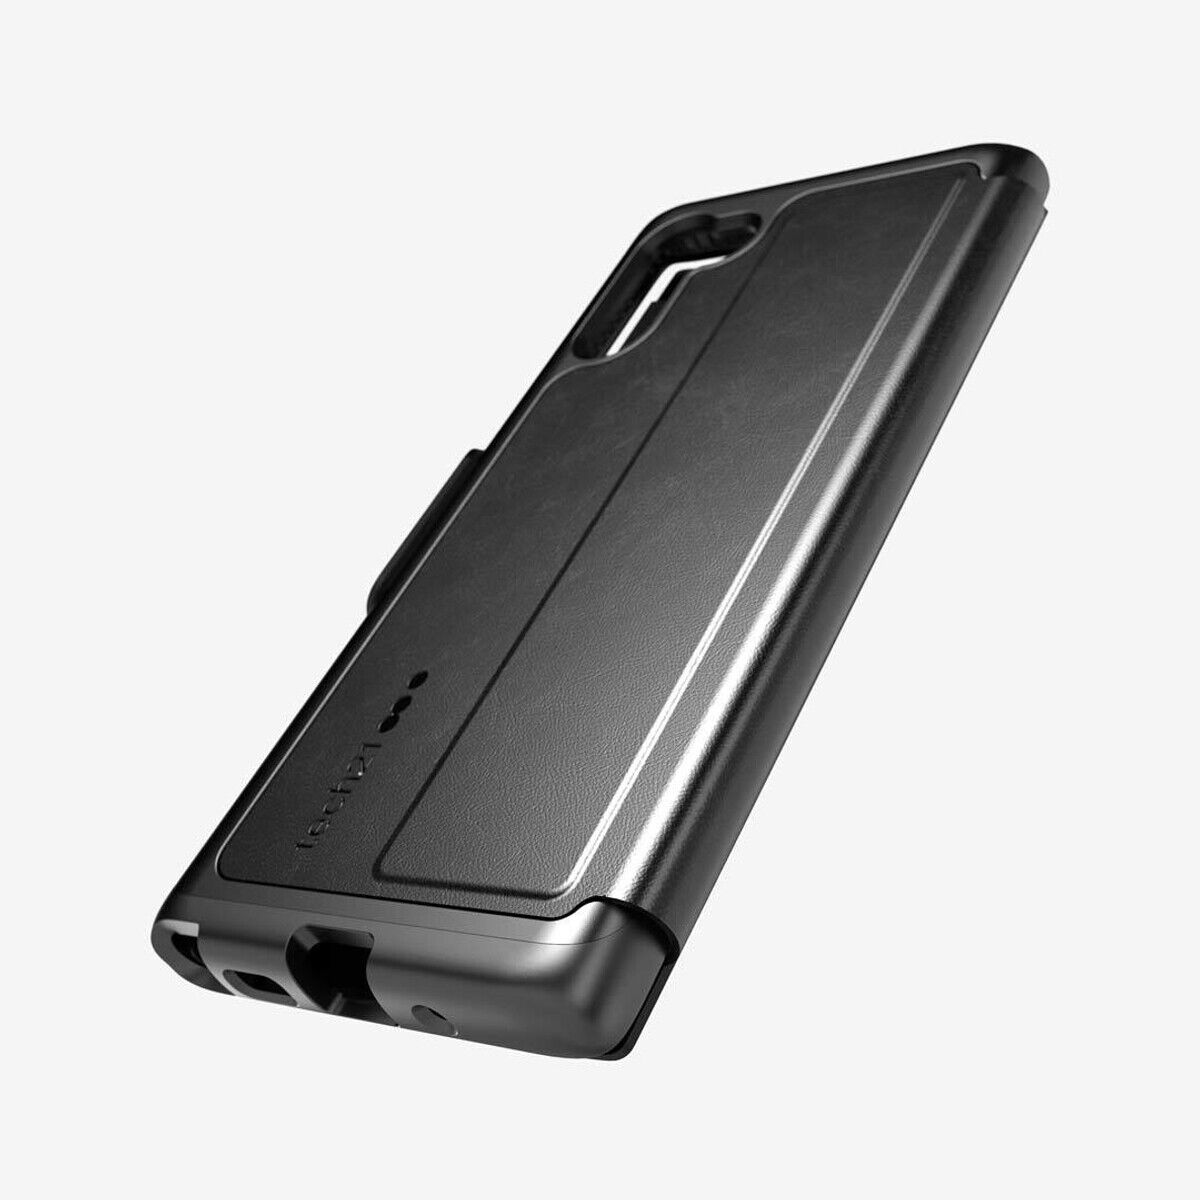 Tech 21 Evo Wallet Samsung Galaxy Note 10 Black Mobile Phone Case